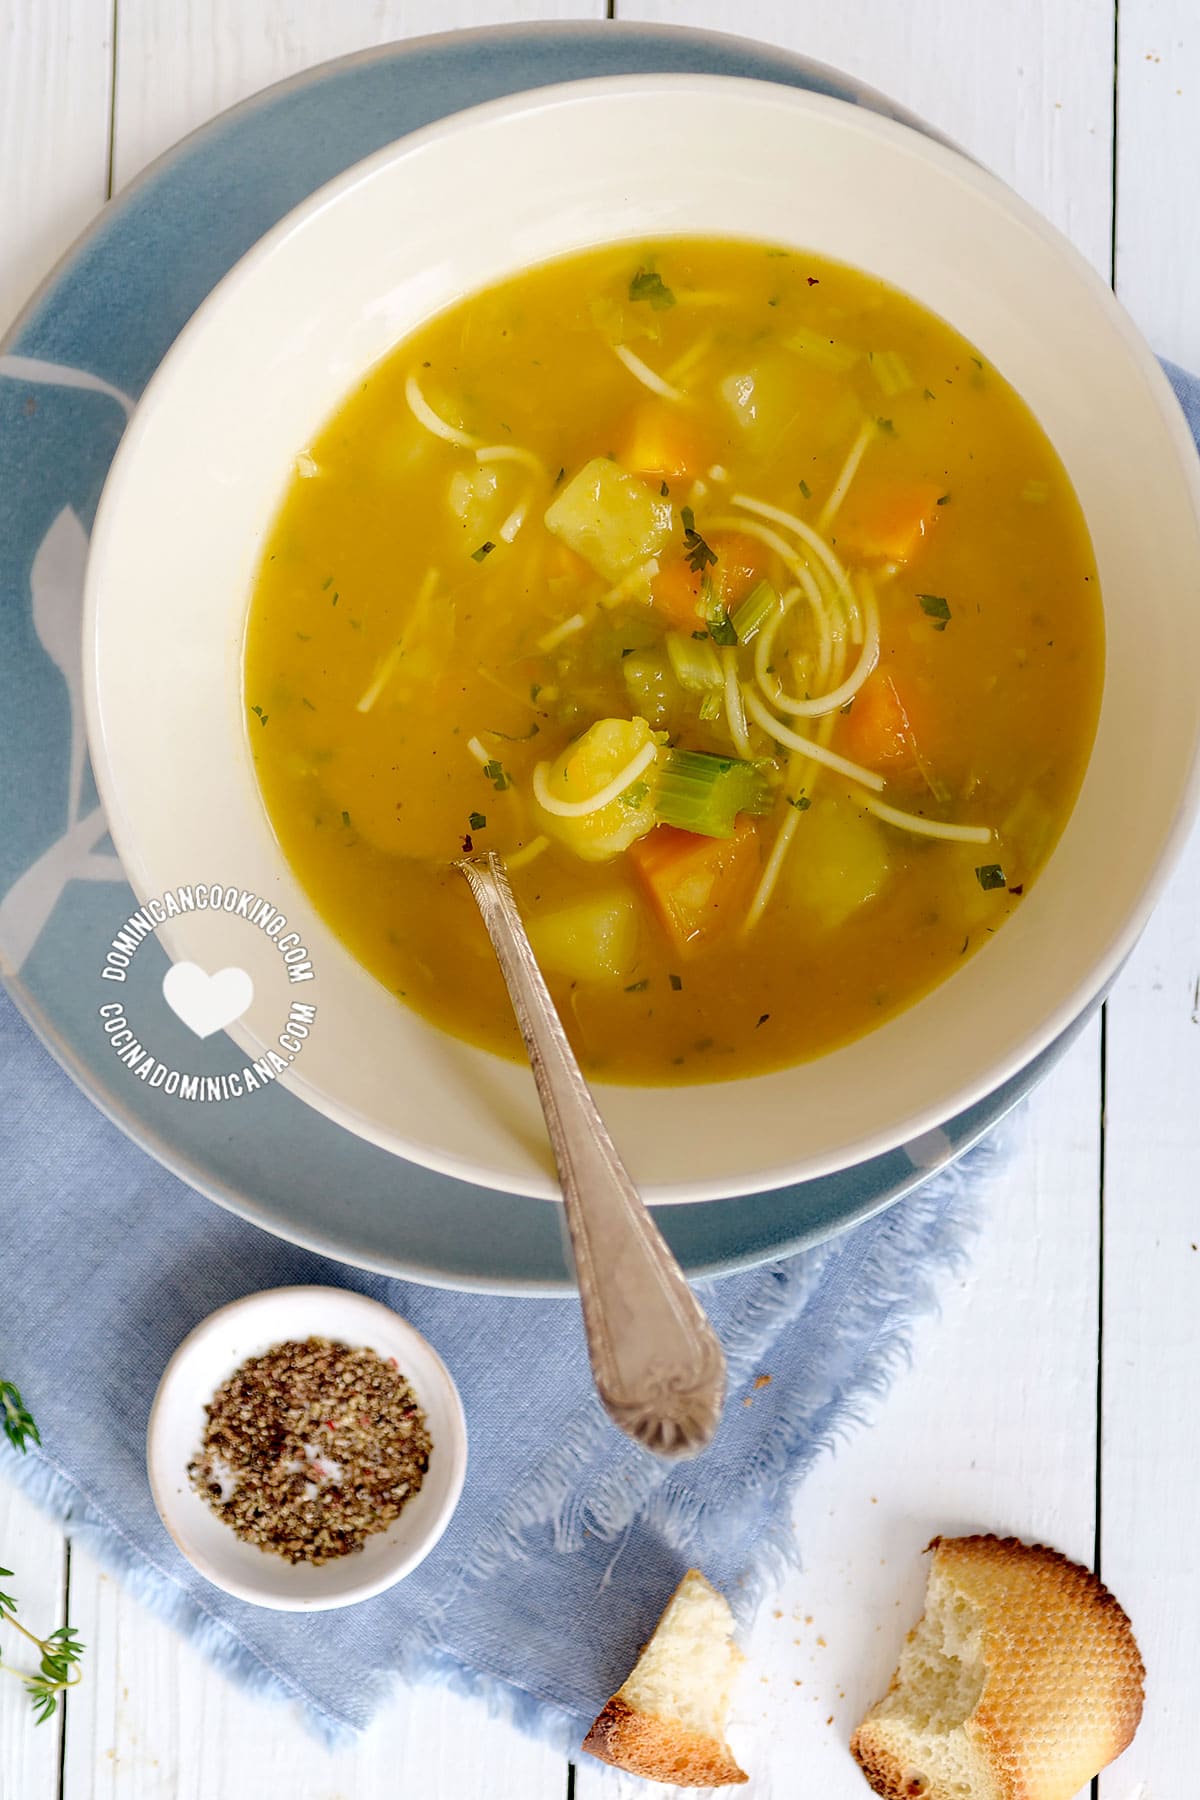 Sopa boba (vegetable soup).